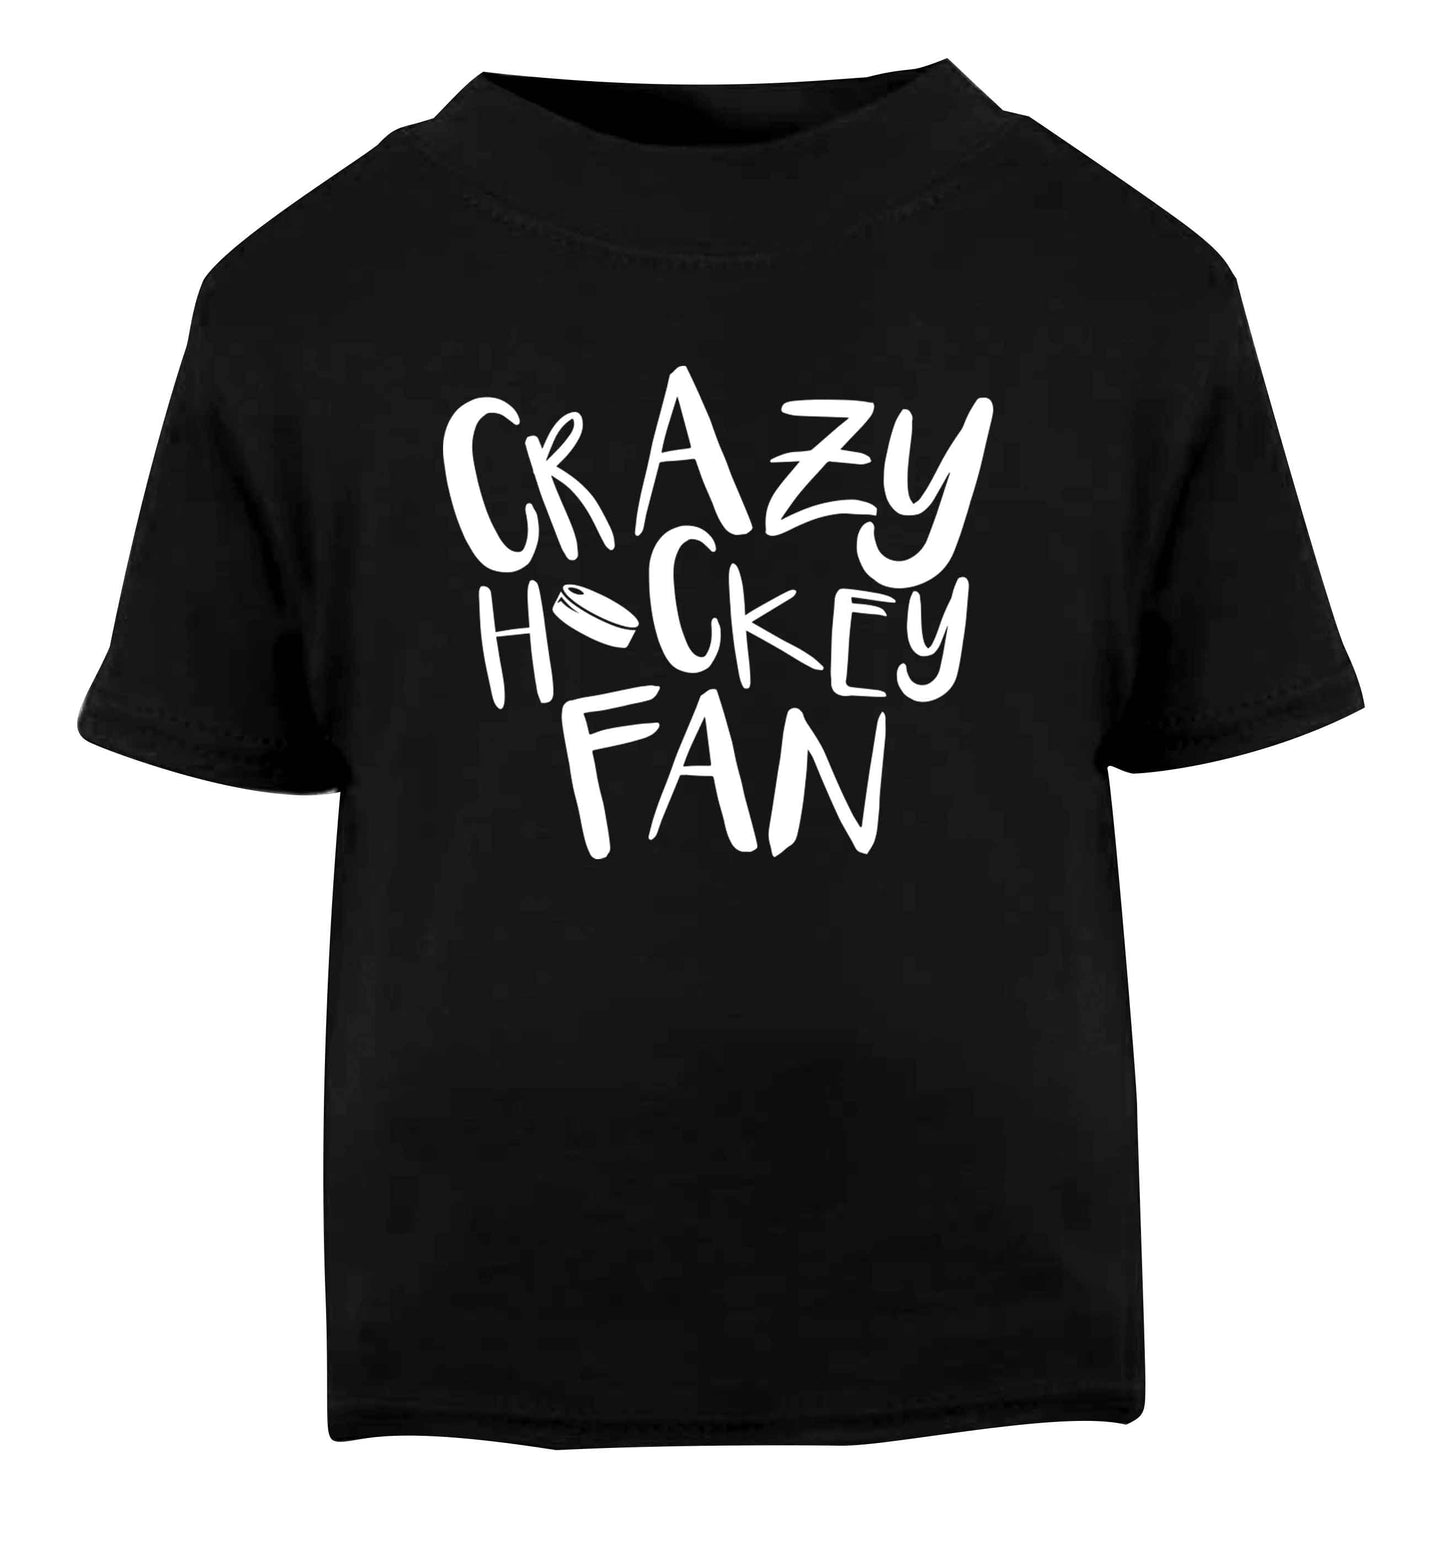 Crazy hockey fan Black Baby Toddler Tshirt 2 years